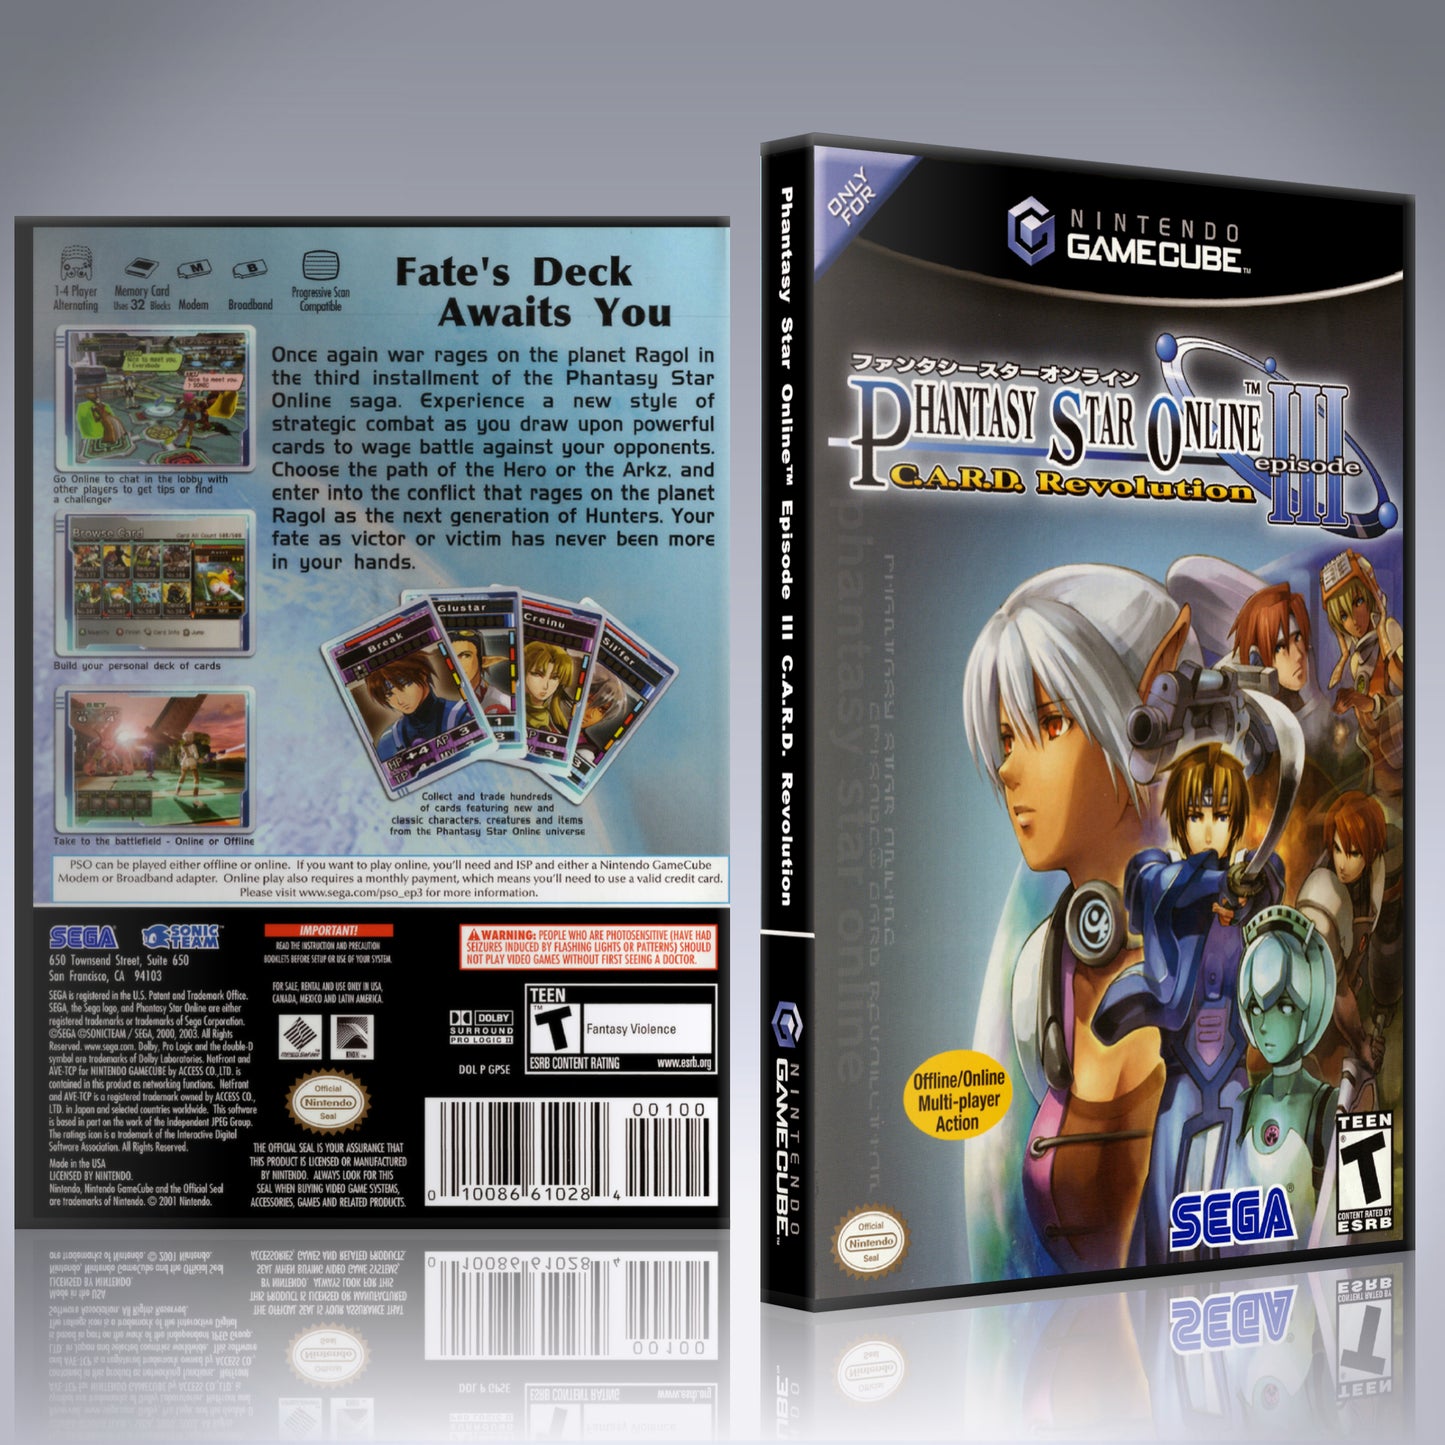 GameCube Replacement Case - NO GAME - Phantasy Star Online - Episode 3 - Card Adventure